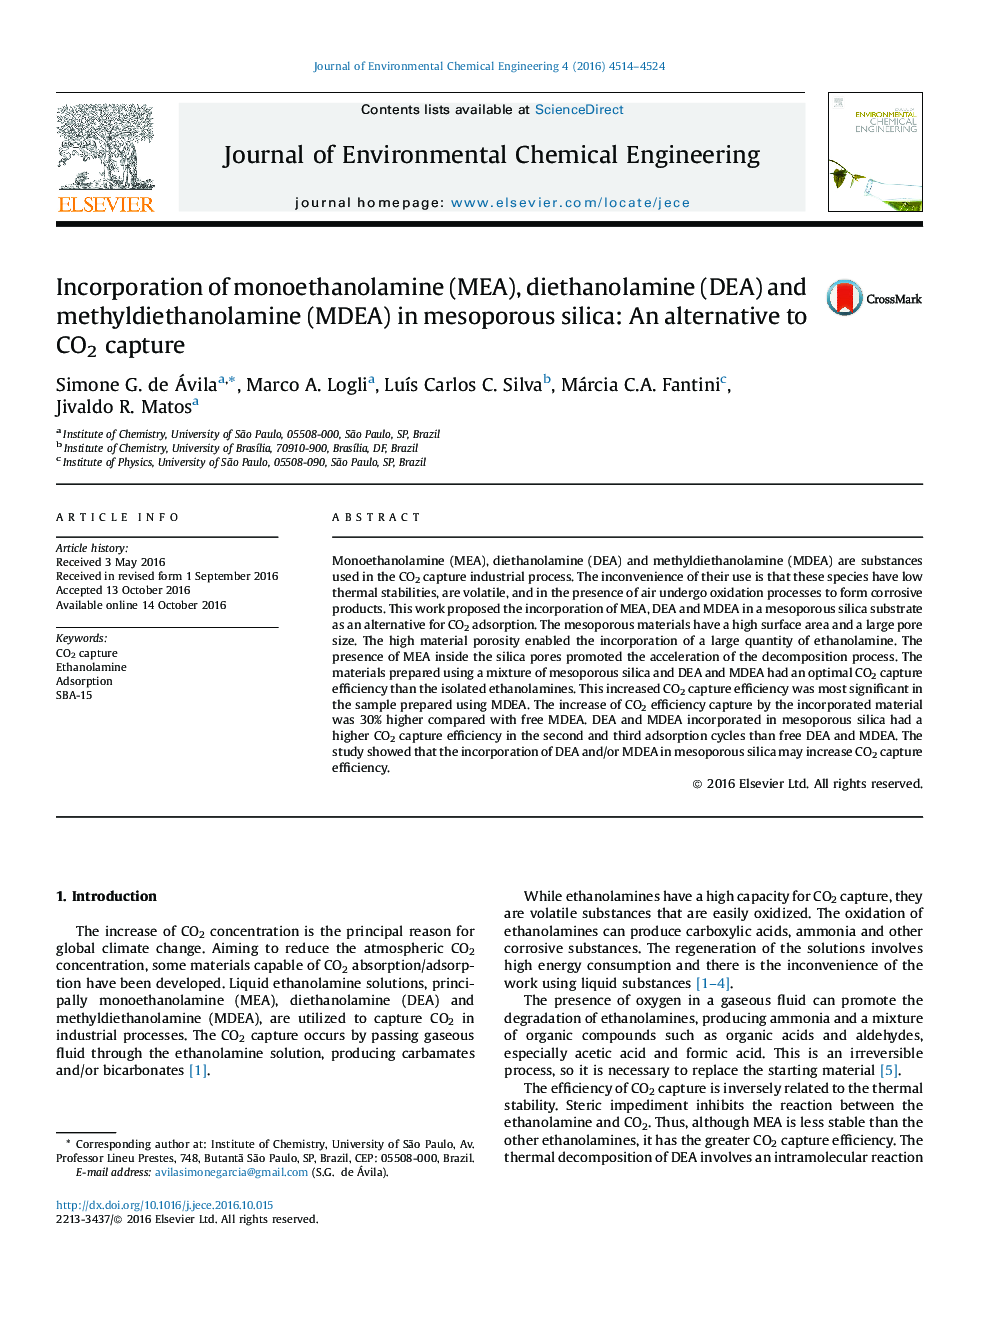 Incorporation of monoethanolamine (MEA), diethanolamine (DEA) and methyldiethanolamine (MDEA) in mesoporous silica: An alternative to CO2 capture